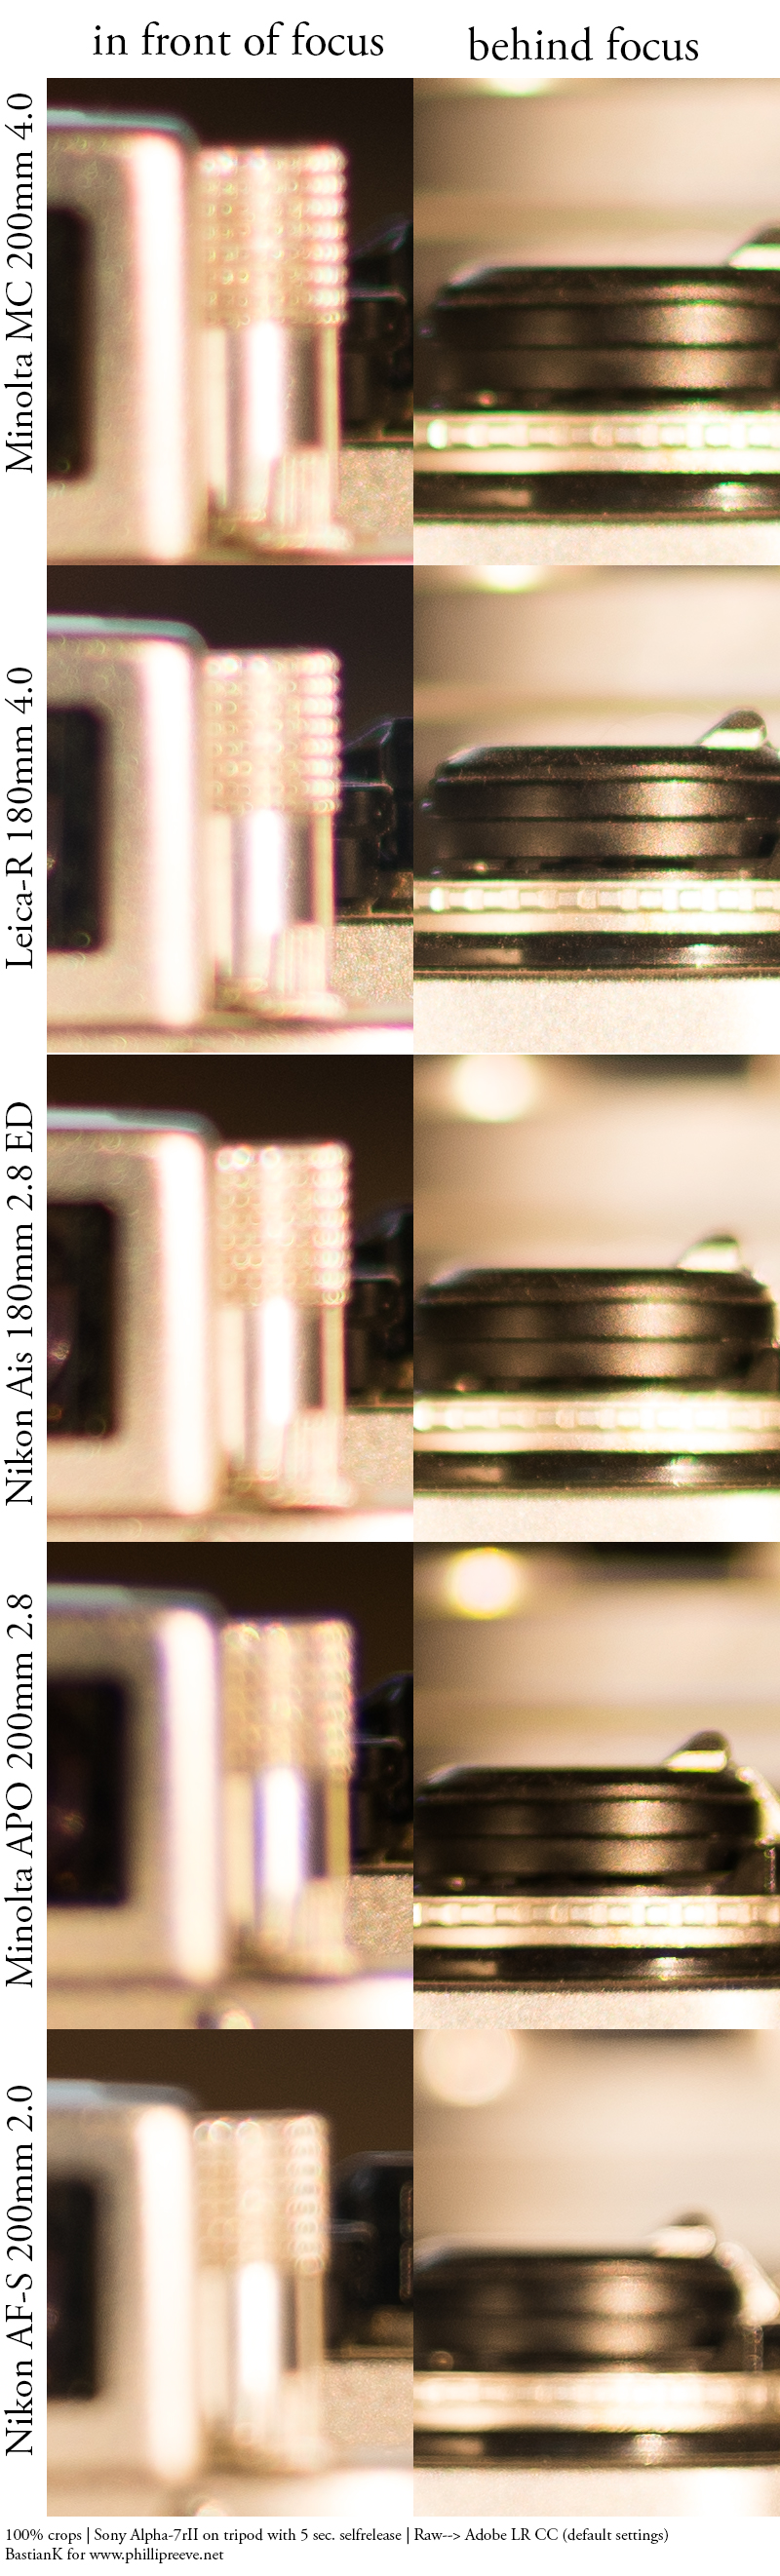 Minolta MC 200mm 4.0 | Leica-R 180mm 4.0 | Nikon Ai-s 180mm 2.8 ED | Minolta 200mm 2.8 APO | Nikon AF-S 200mm 2.0G VRI comparison loCA longitudinal chromatic aberrations